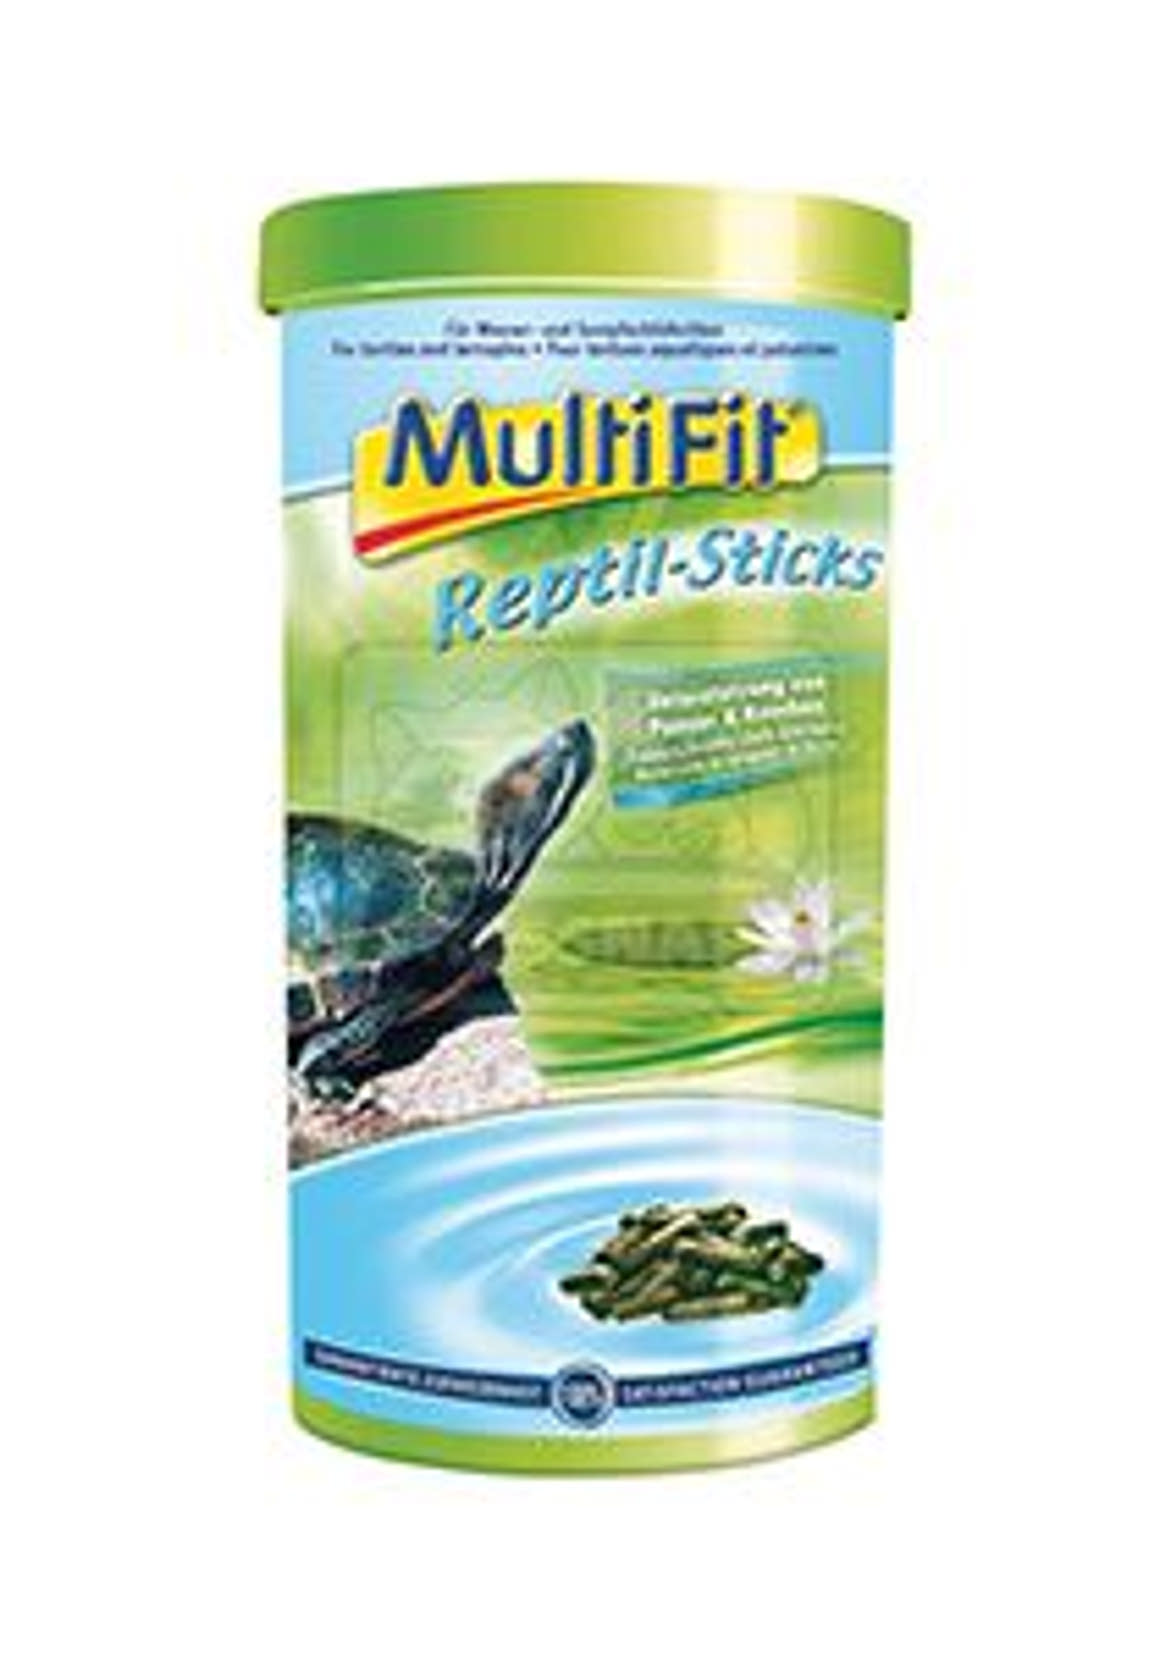 Multifit teknős eledel sticks